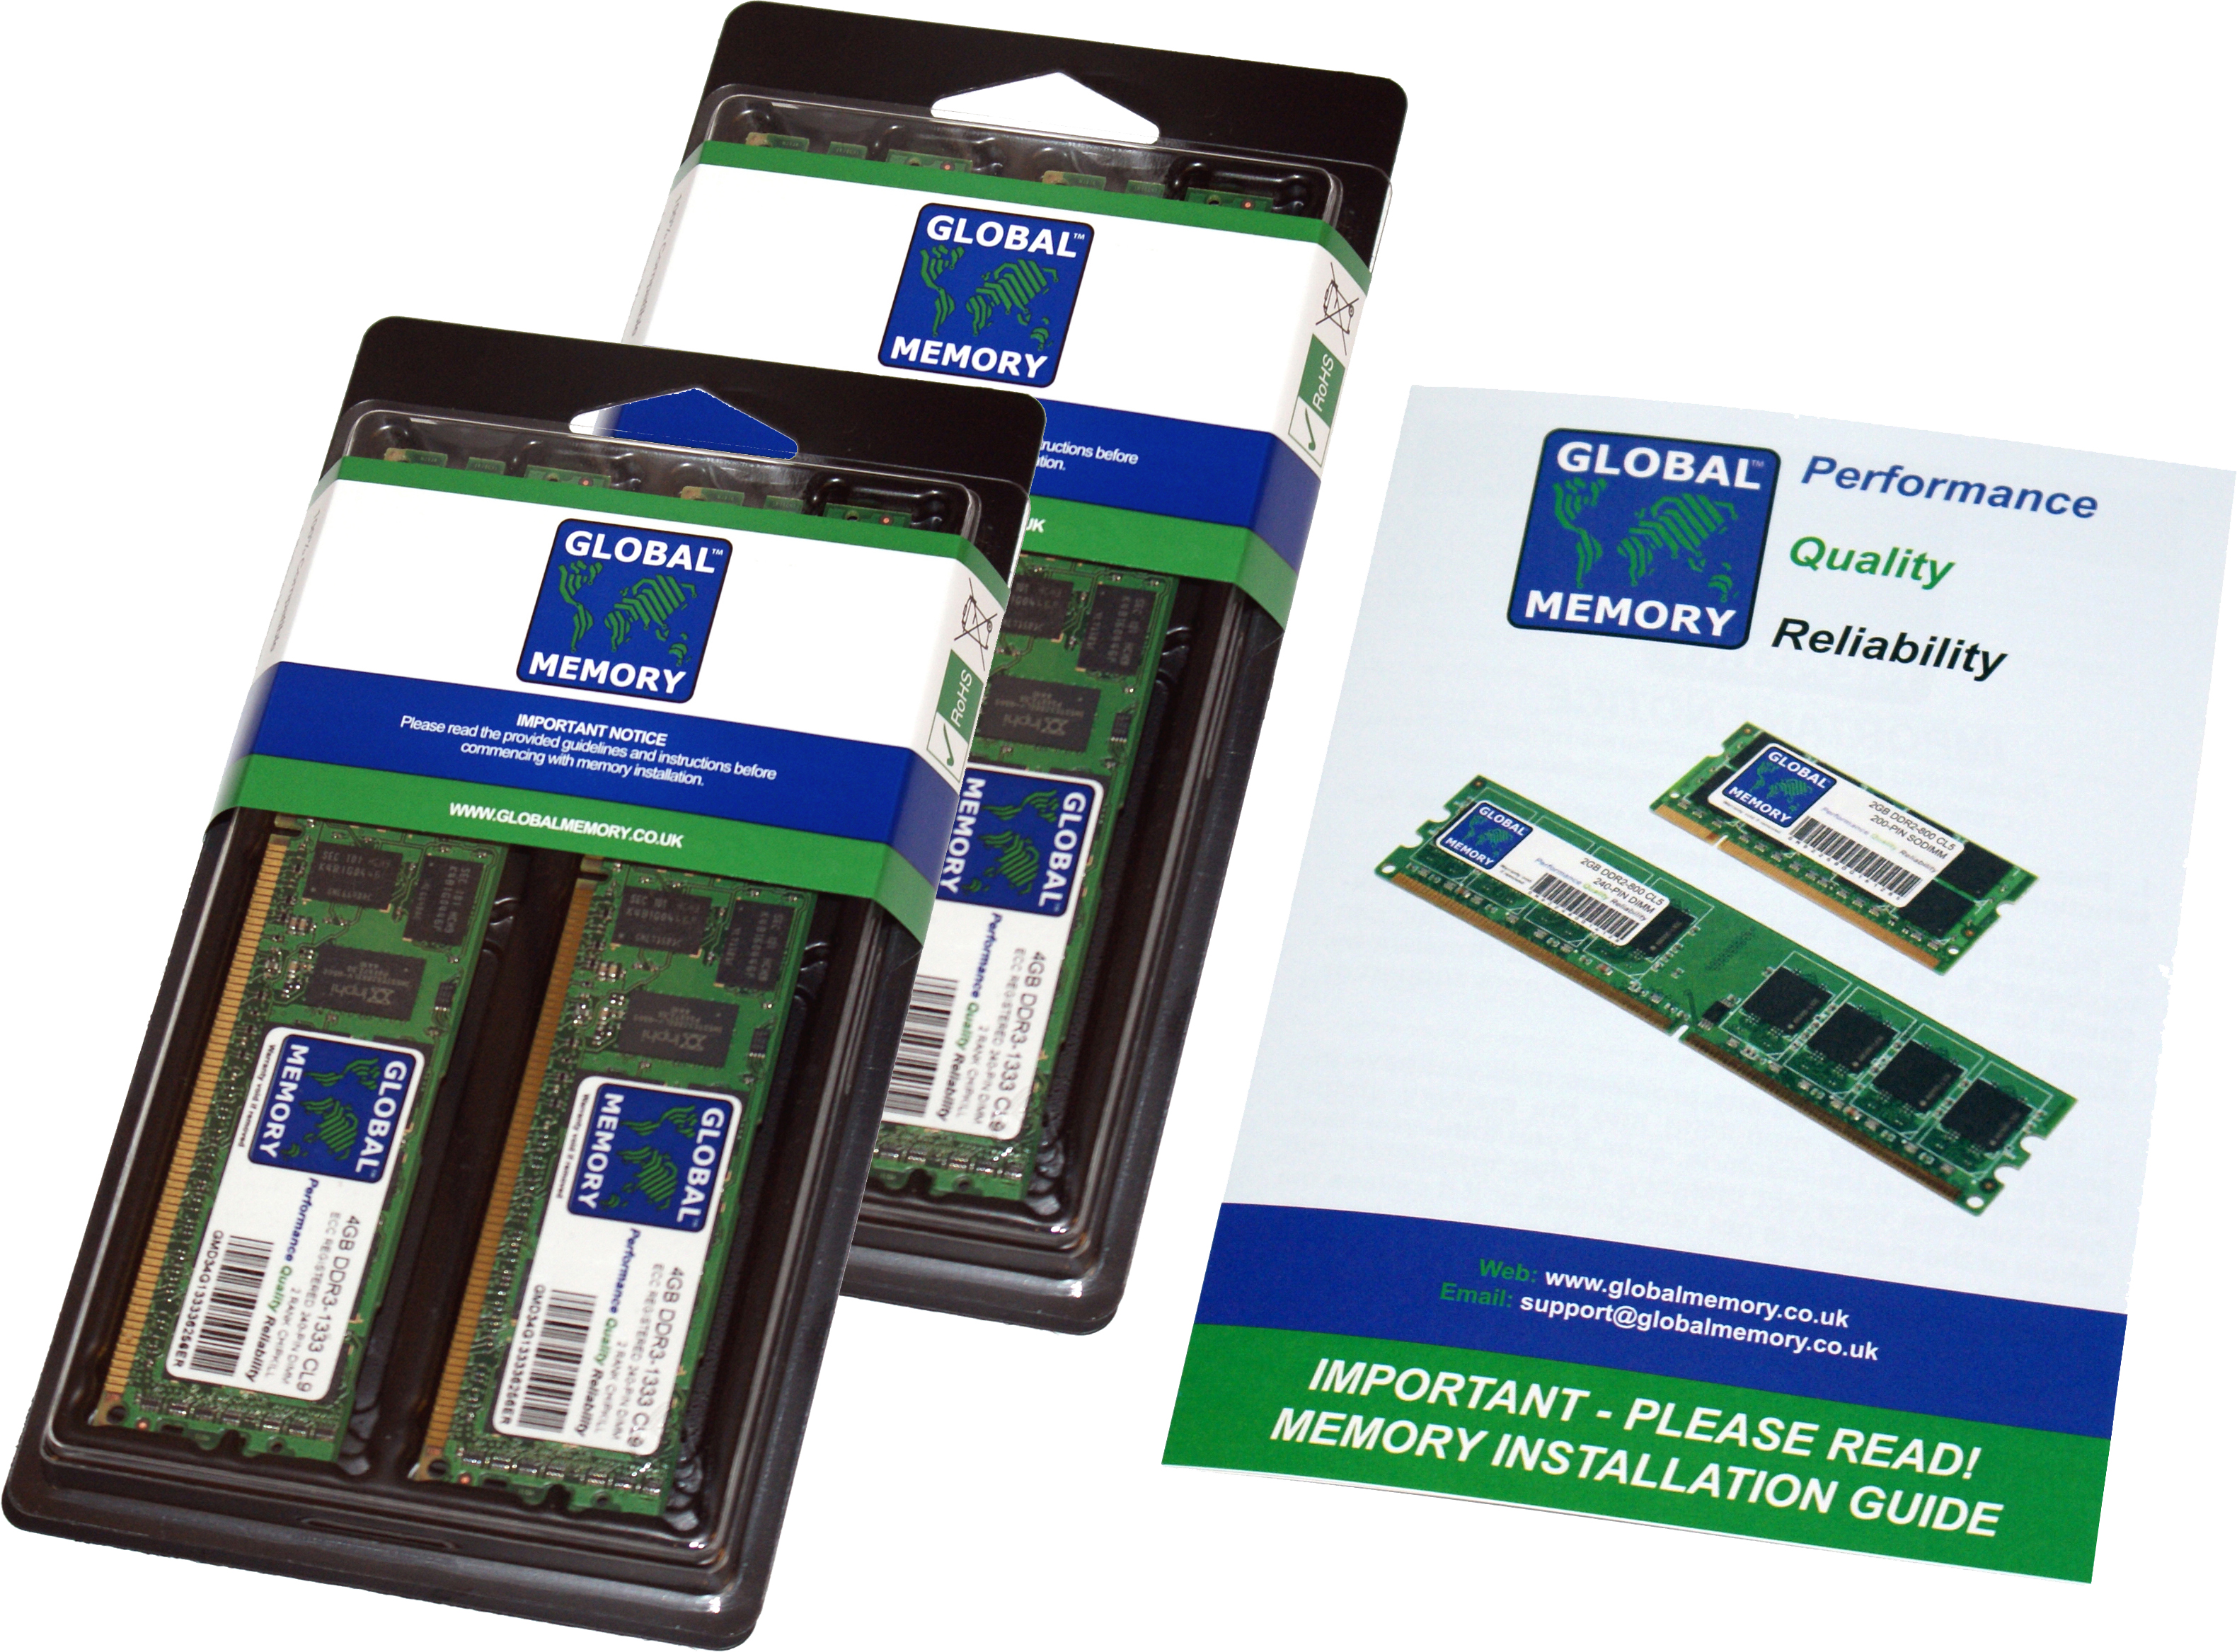 128GB (4 x 32GB) DDR4 2133MHz PC4-17000 288-PIN ECC REGISTERED DIMM (RDIMM) MEMORY RAM KIT FOR SERVERS/WORKSTATIONS/MOTHERBOARDS (8 RANK KIT CHIPKILL)